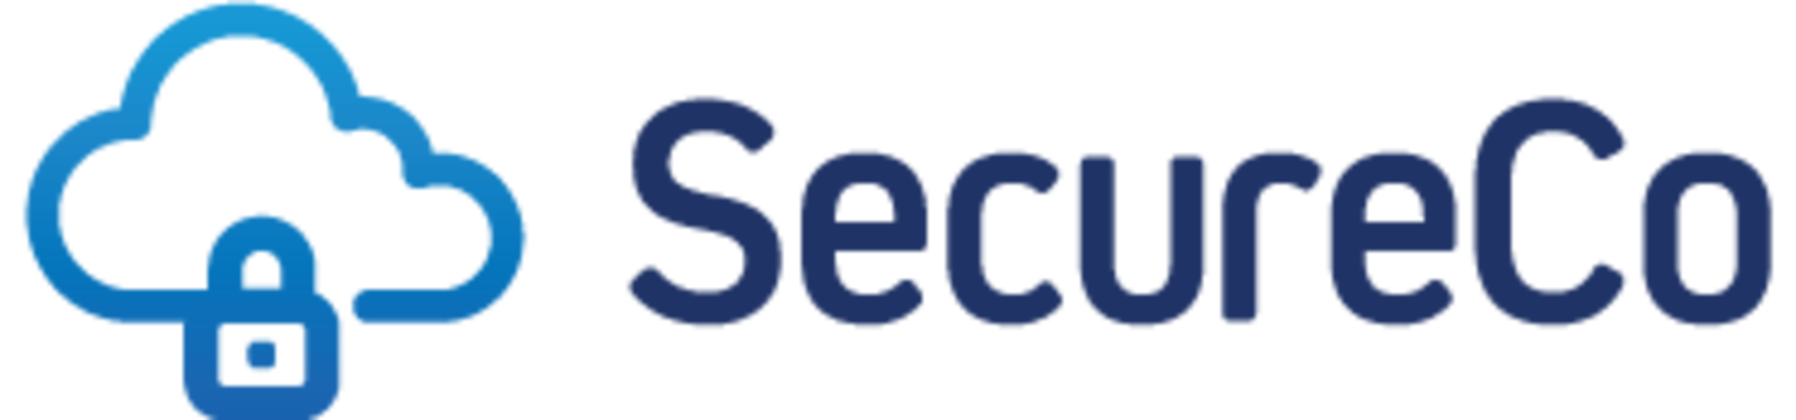 NEXTDC partner - SecureCo